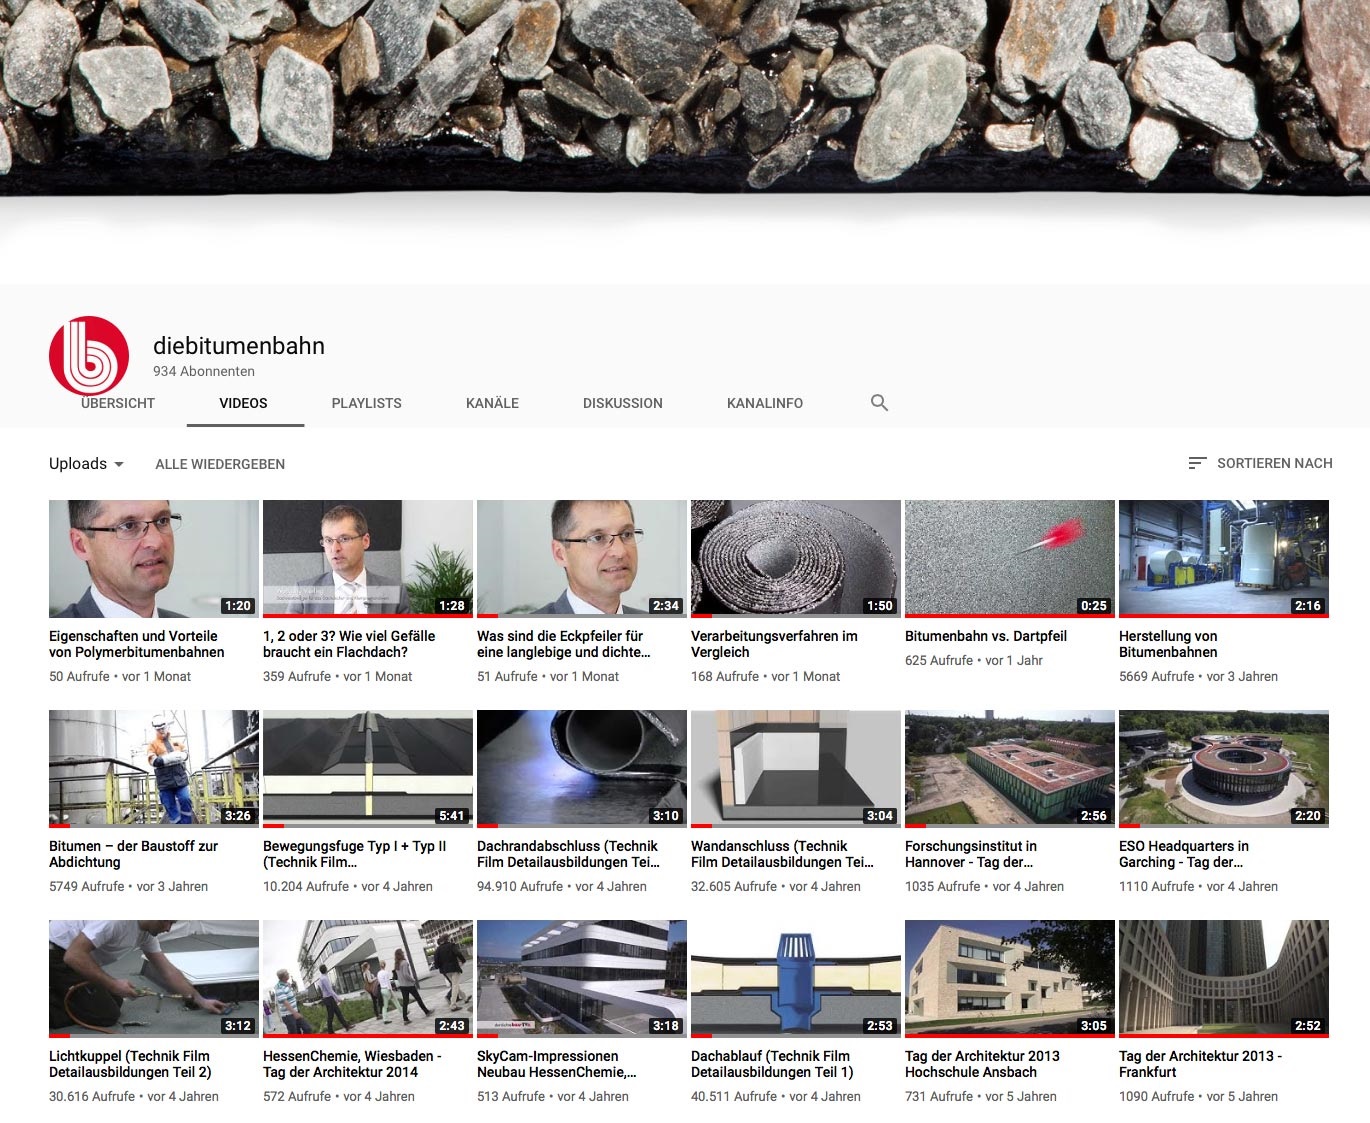 vdd Industrieverband YouTube-Channel 